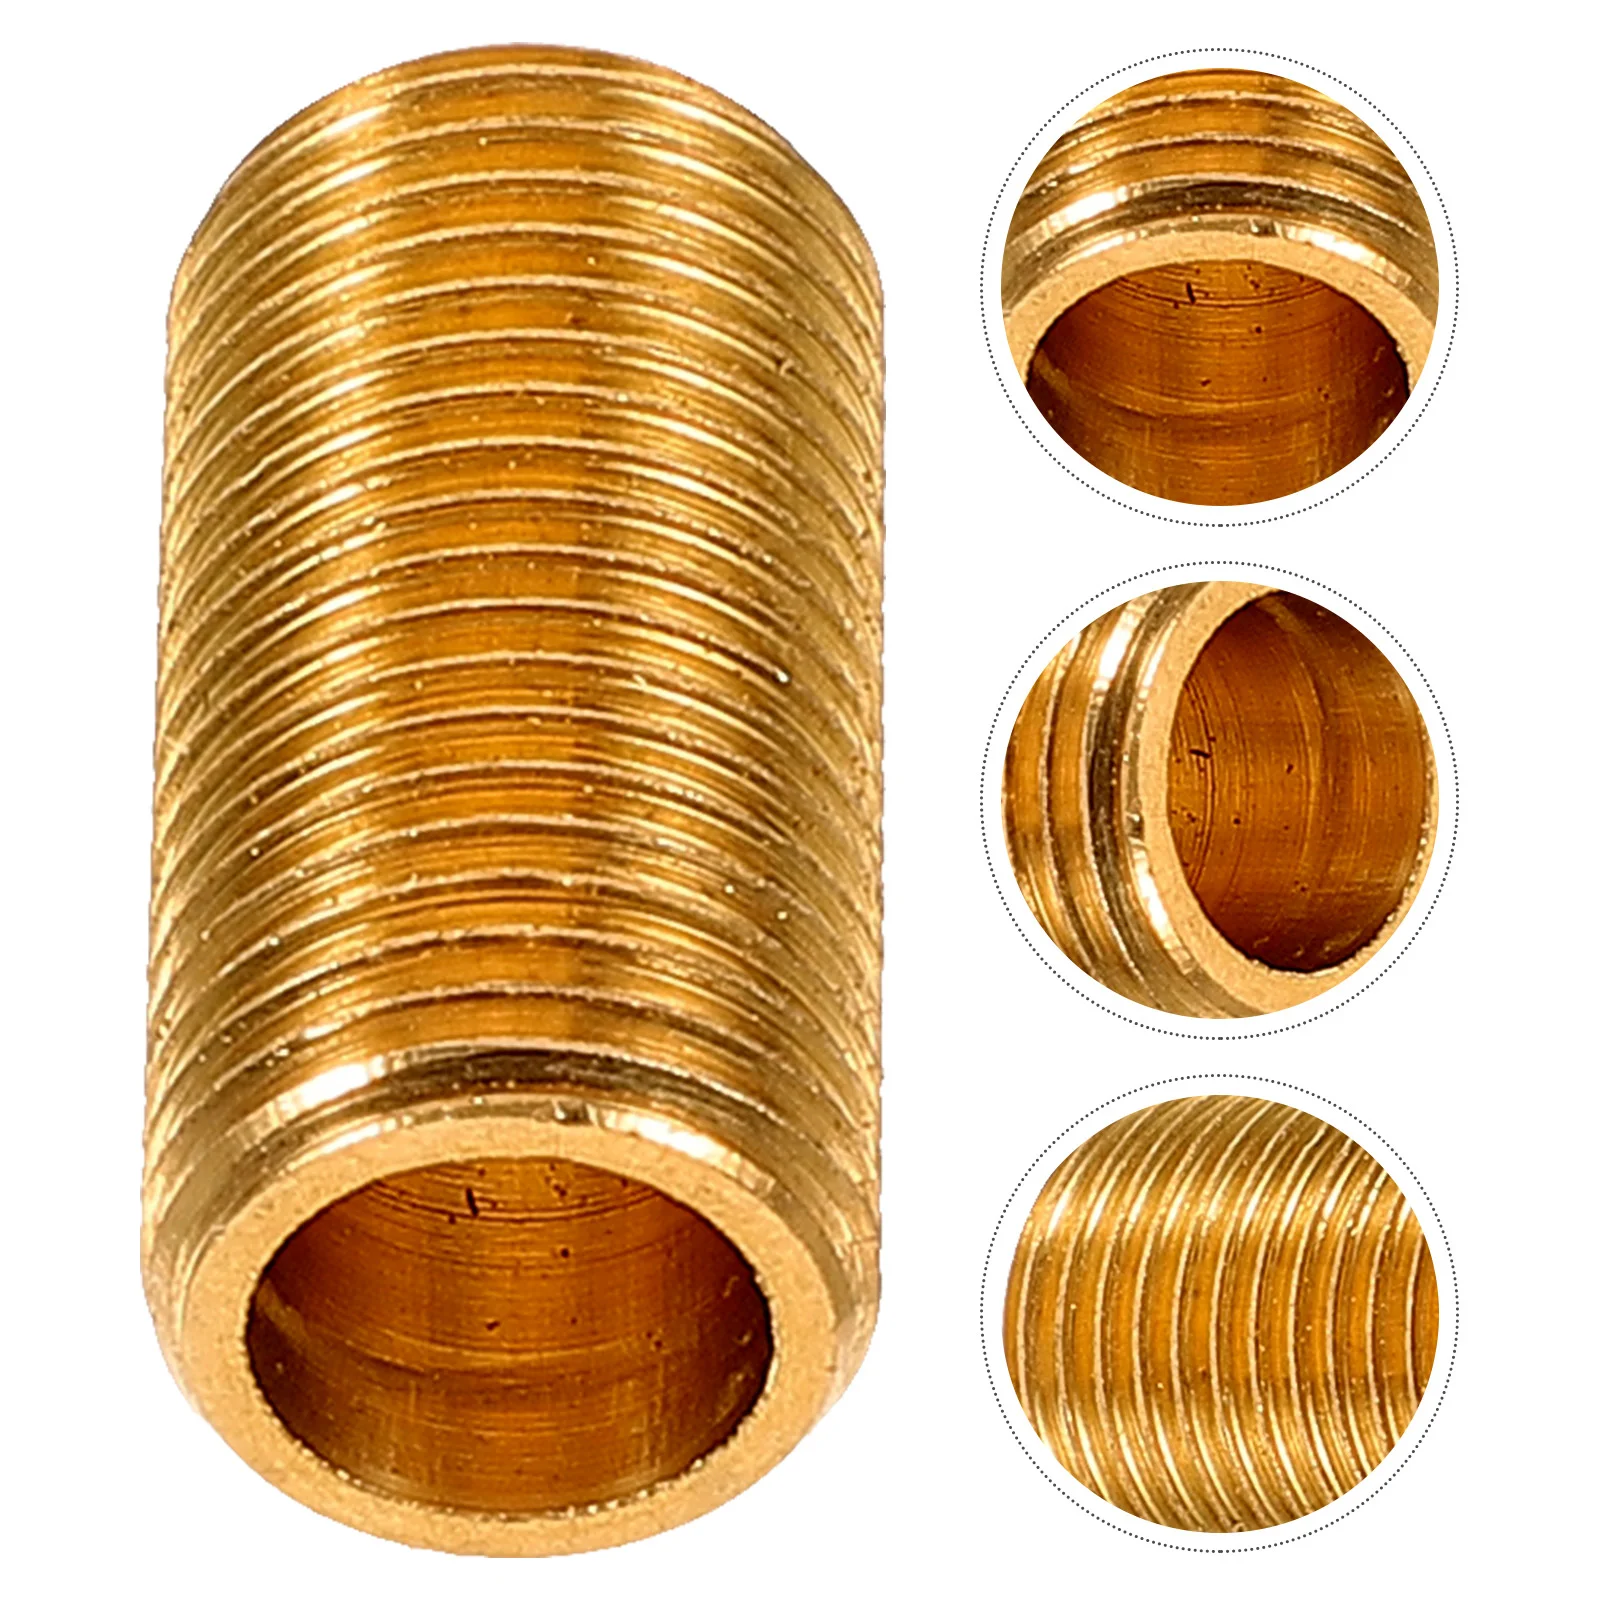 

8 Pcs Metric System Brass Dental Tube Pendant Light Fixtures Extension Rod Coupling Copper Screw Bolt Lighting